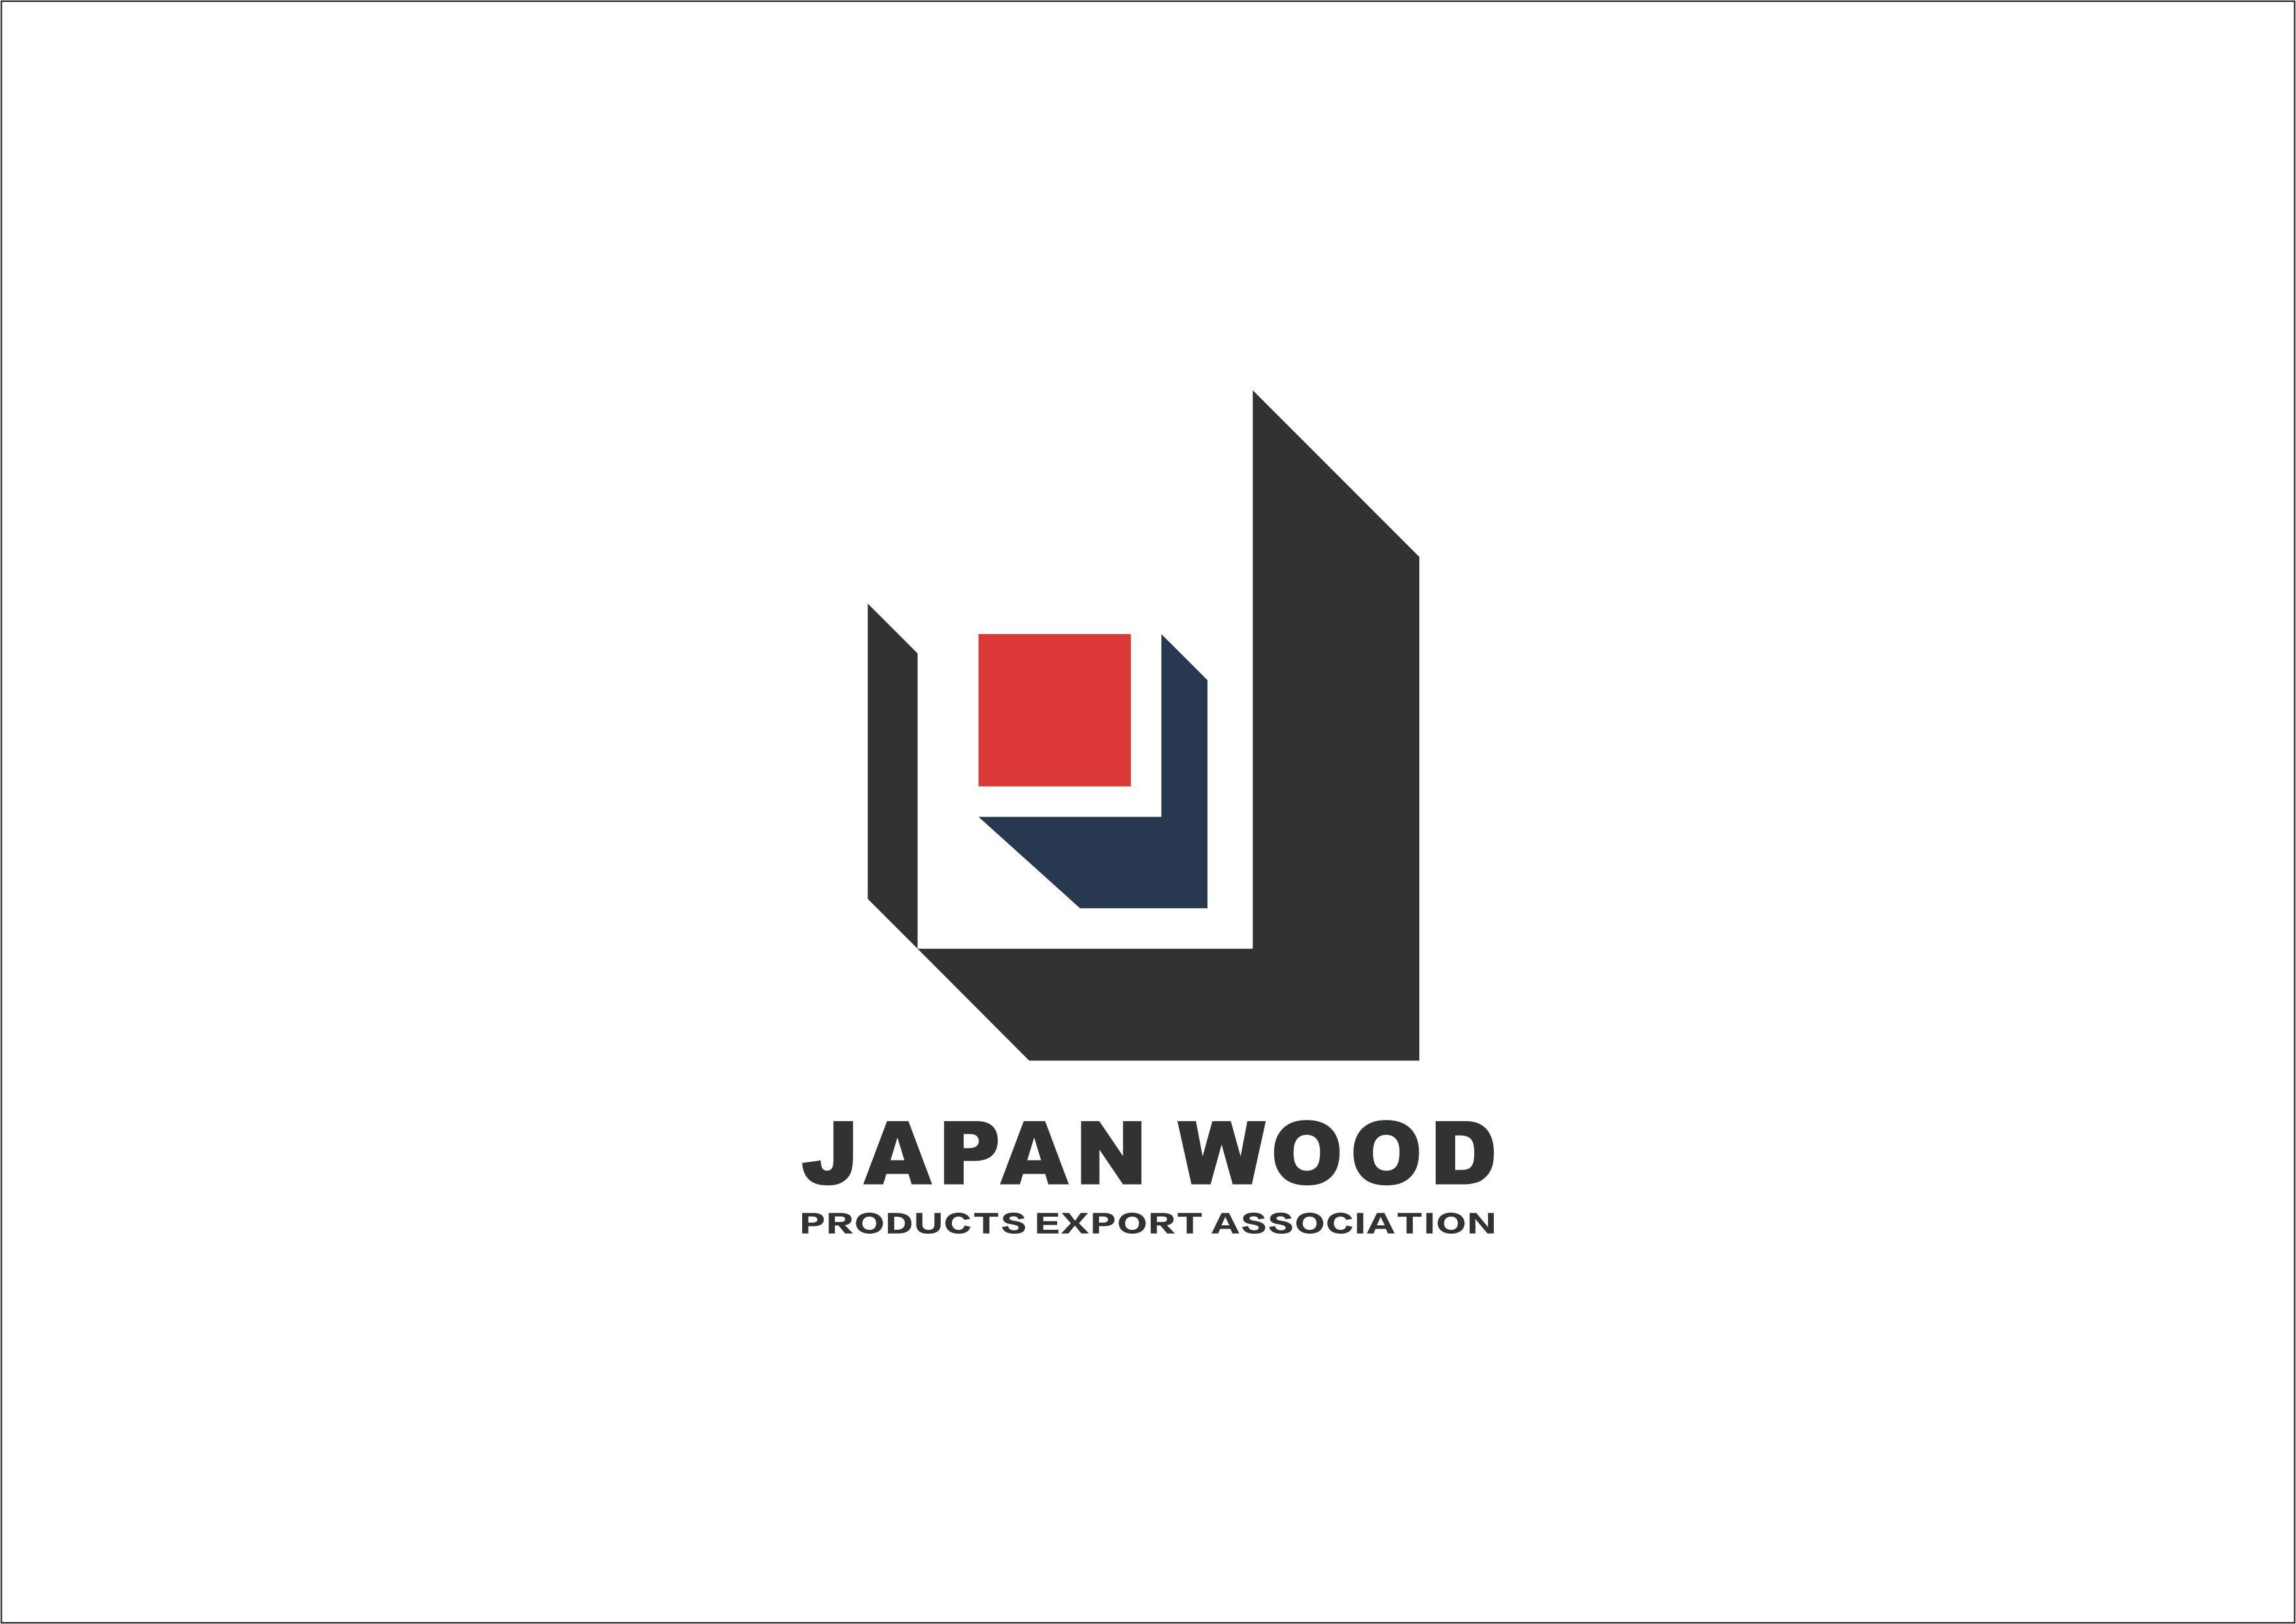 Japan Wood Products Export Association